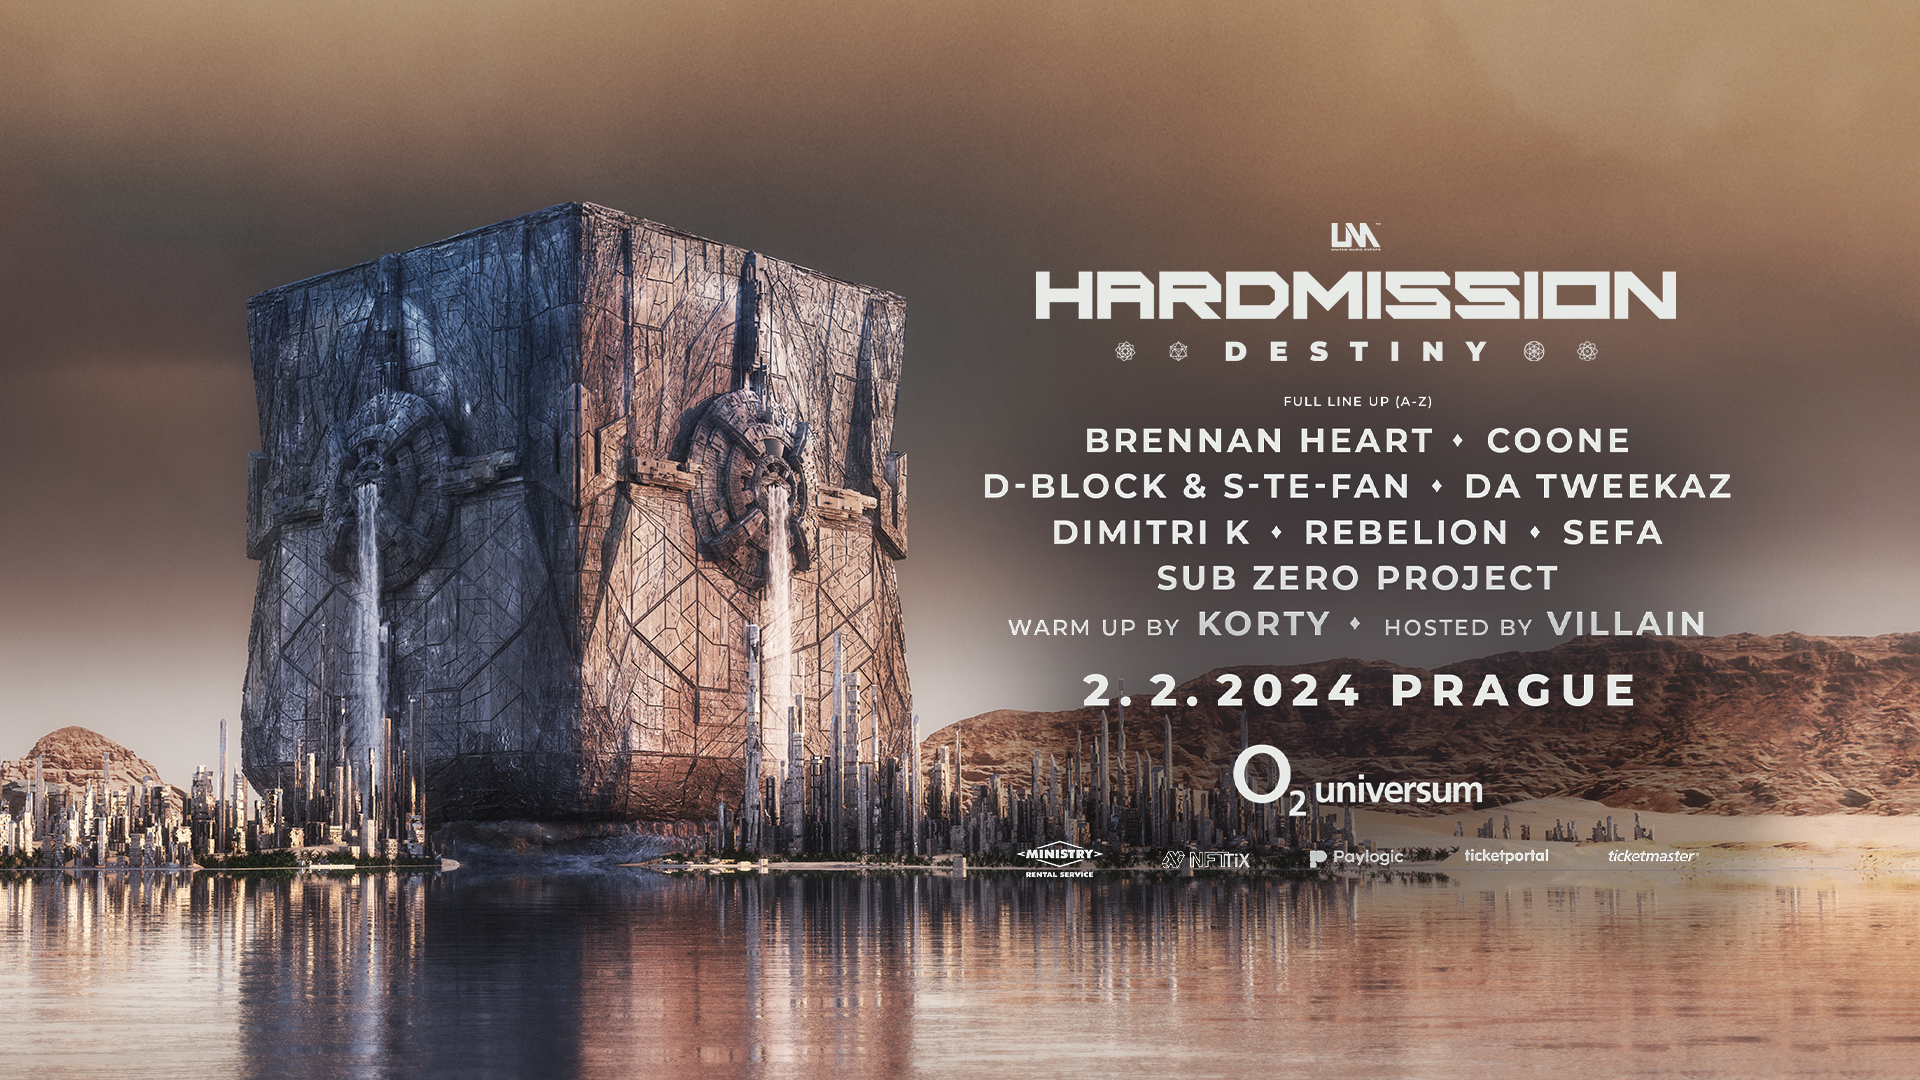 Hardmission Destiny Prague full lineup